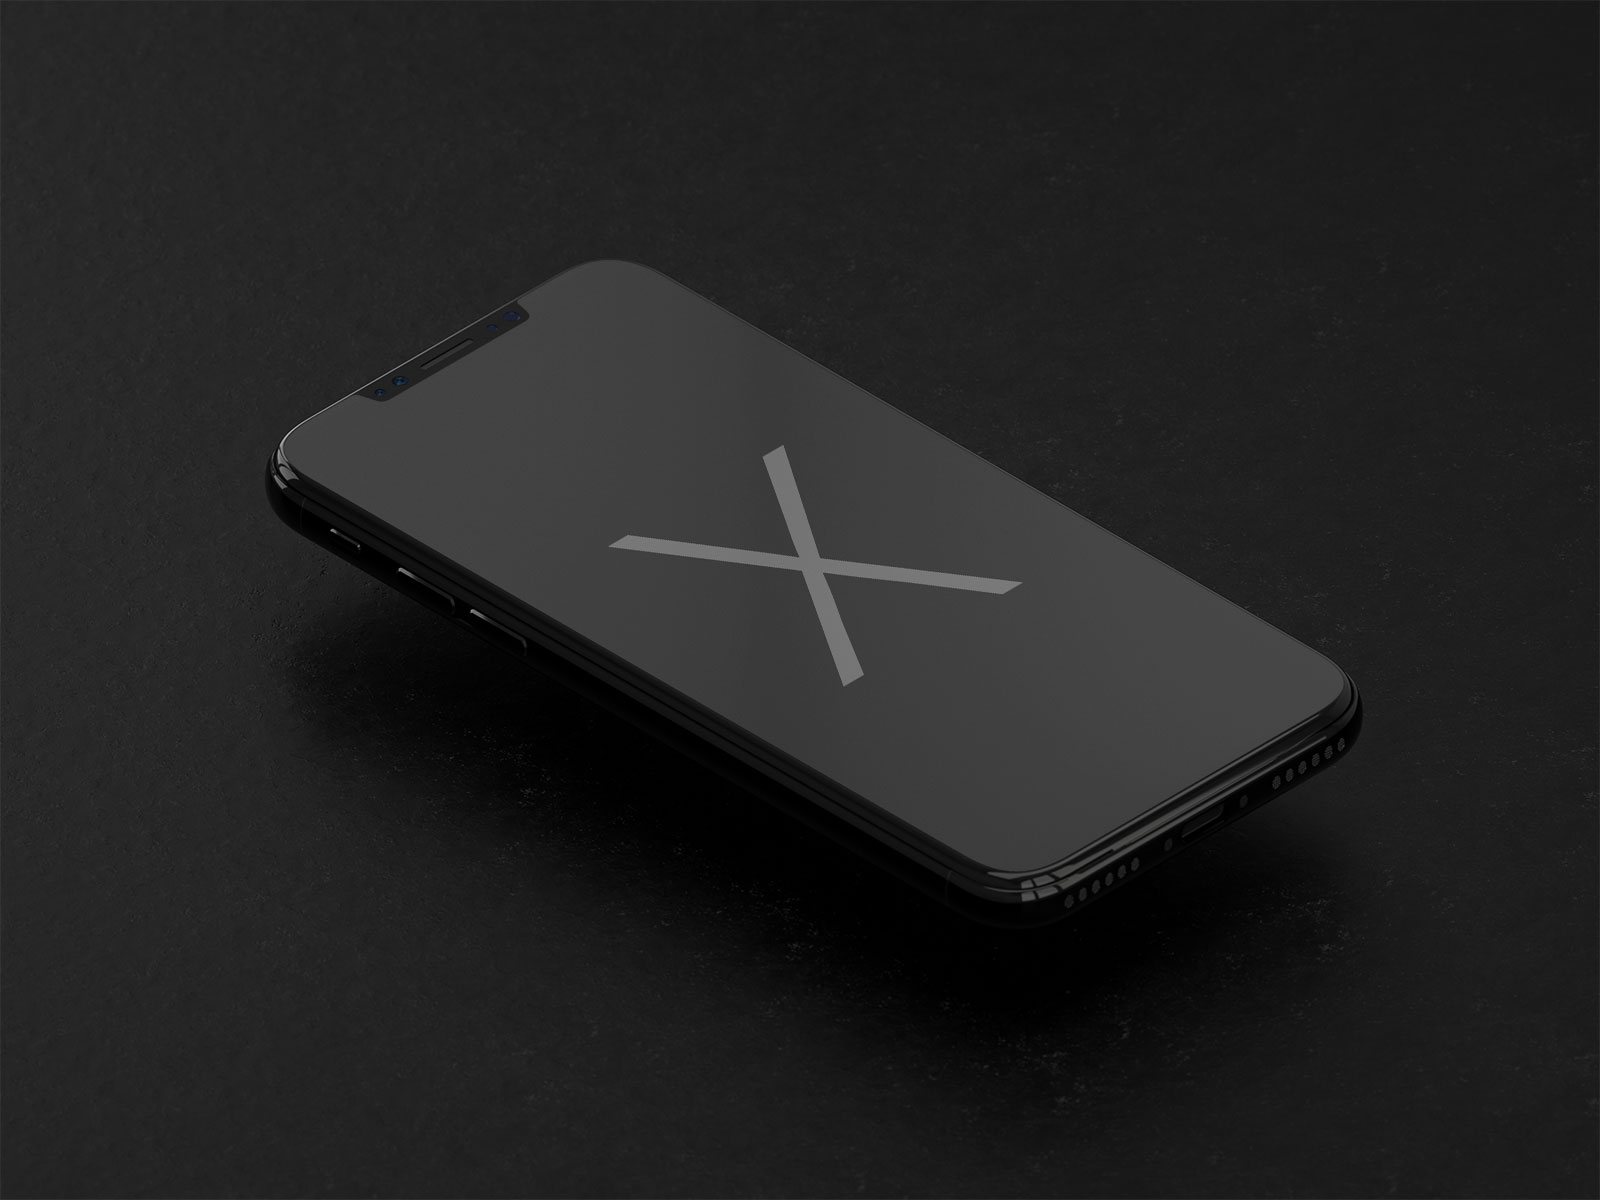 Free Apple iPhone X Black Mockup PSD | 3D Render - Good Mockups